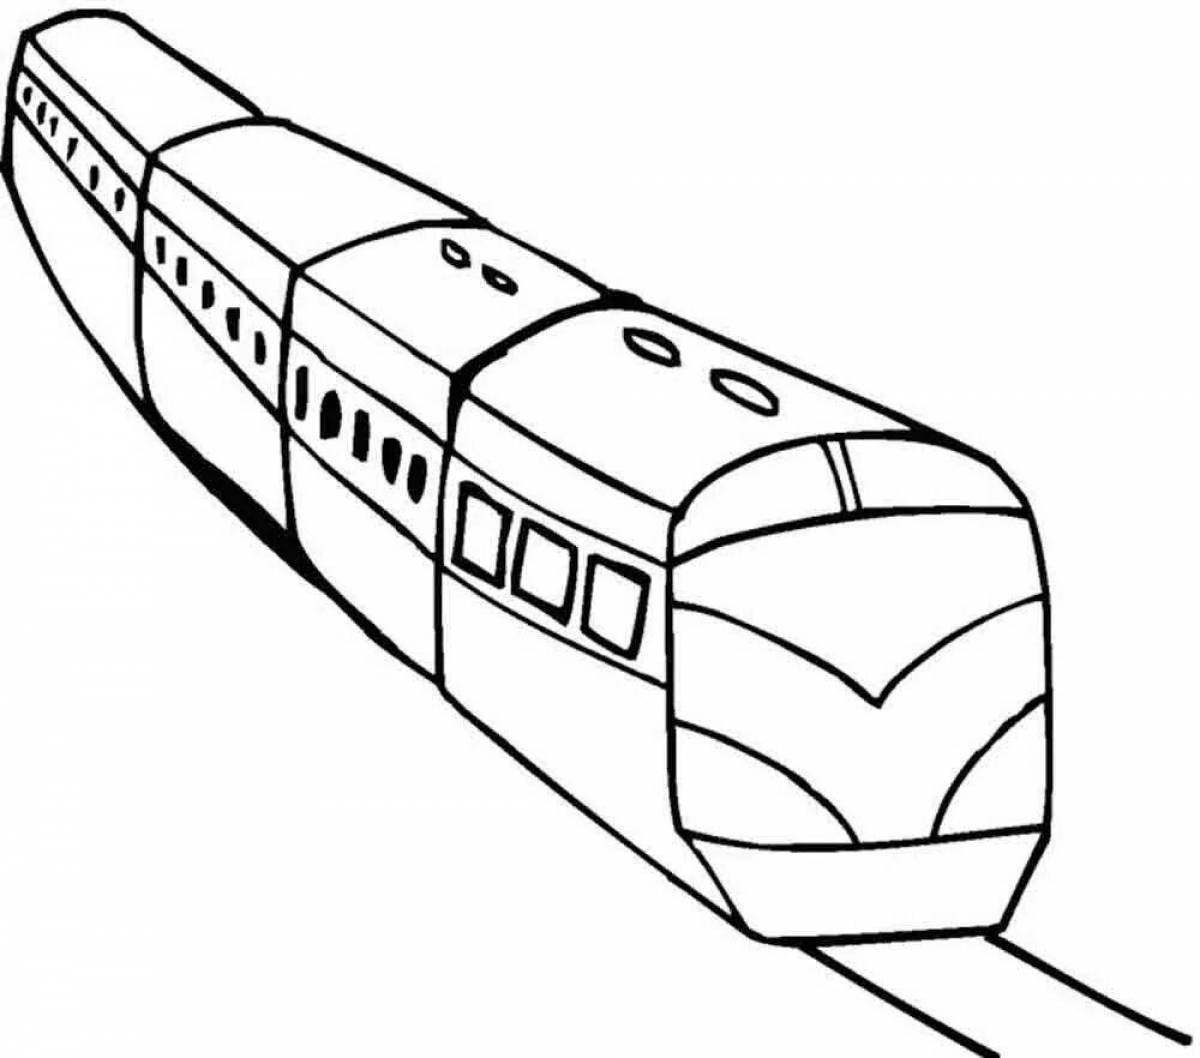 Artistic sketch of a train